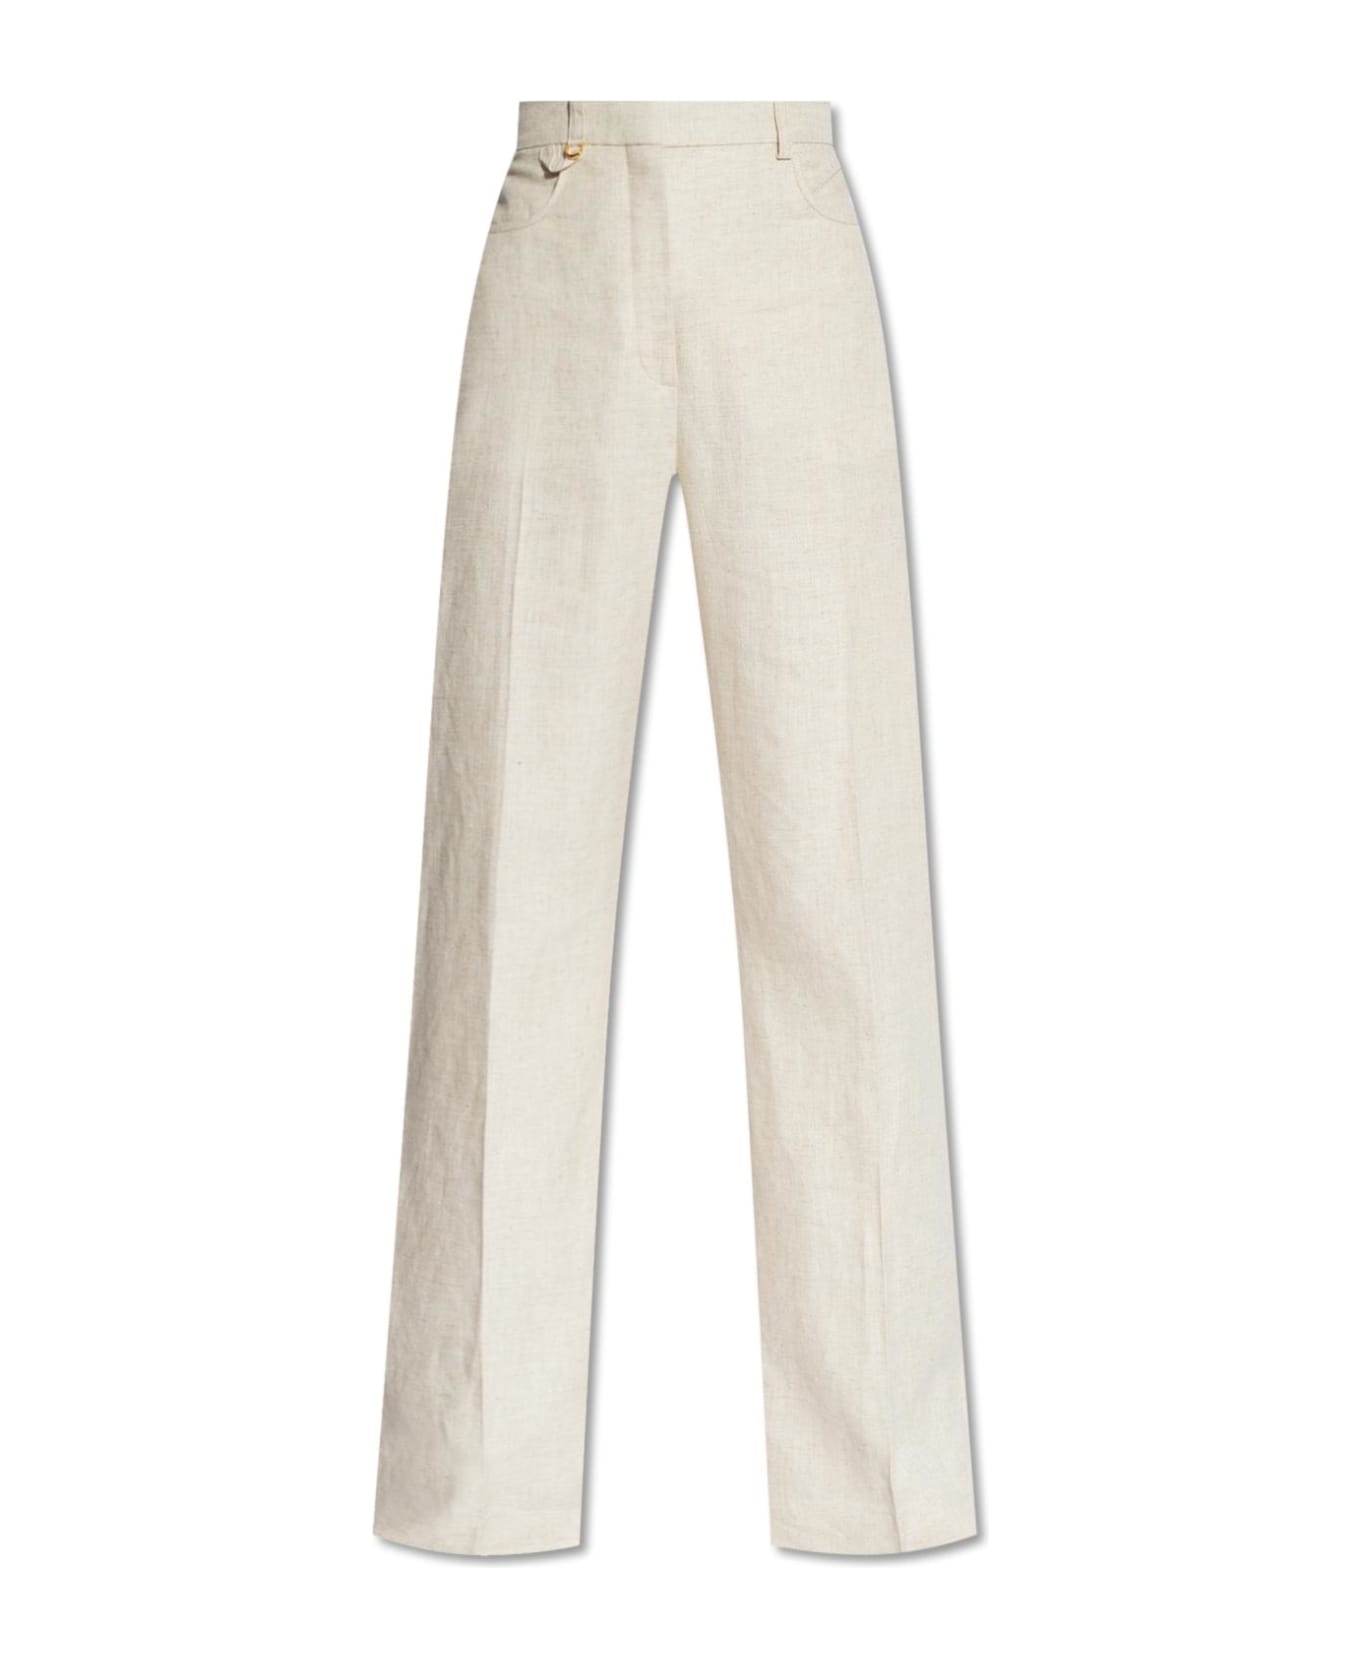 Jacquemus Sauge Viscose And Linen Trousers - Light beige